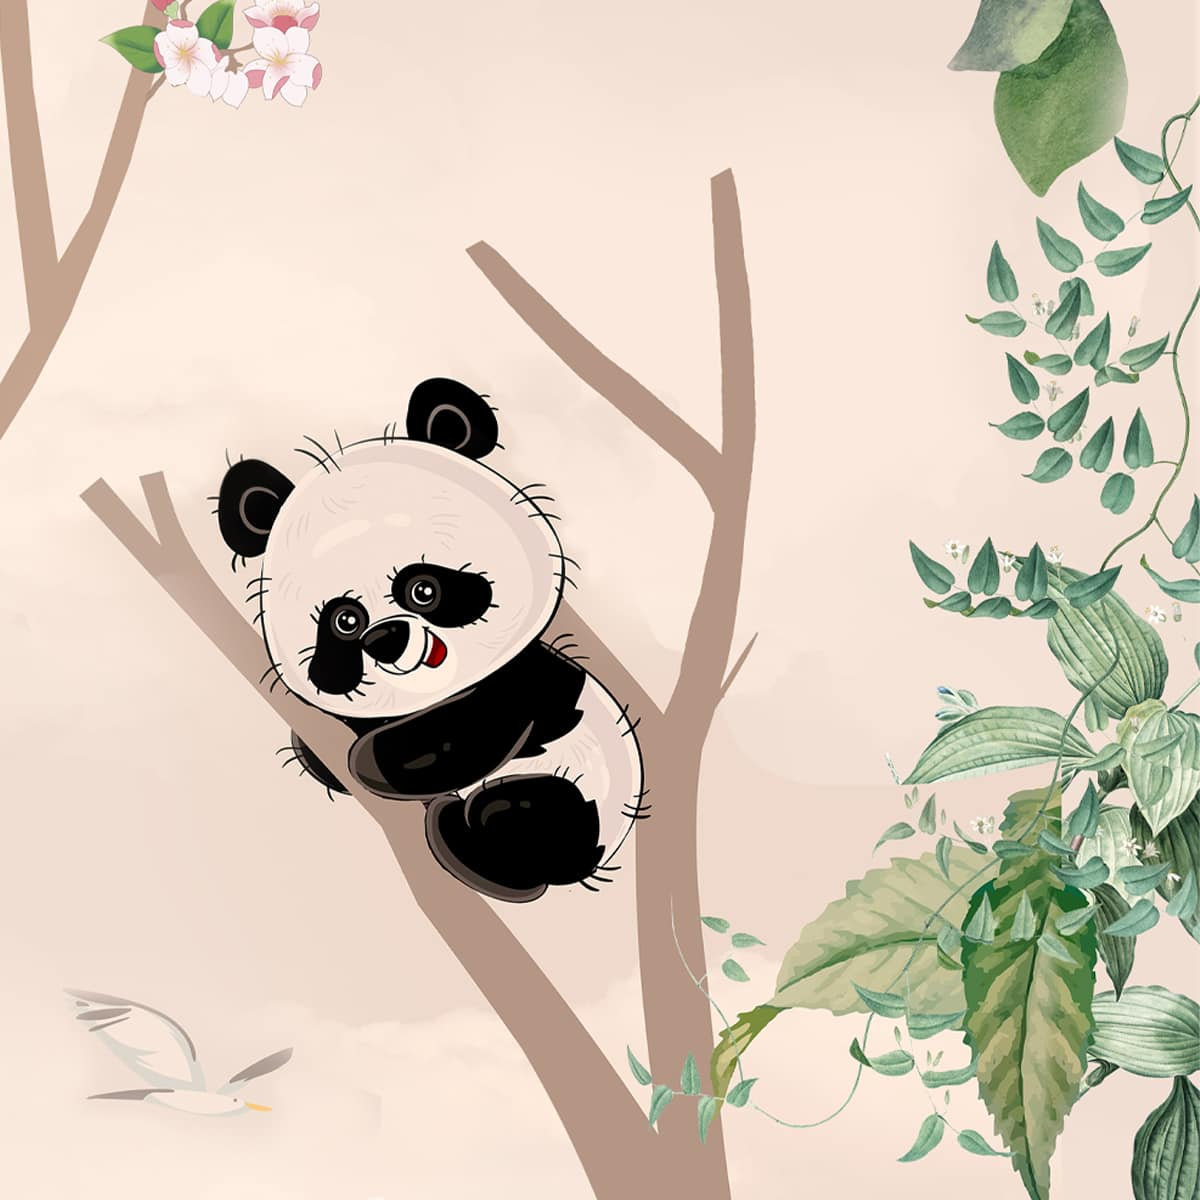 Cute panda on hammock wallpaper for kids room wall